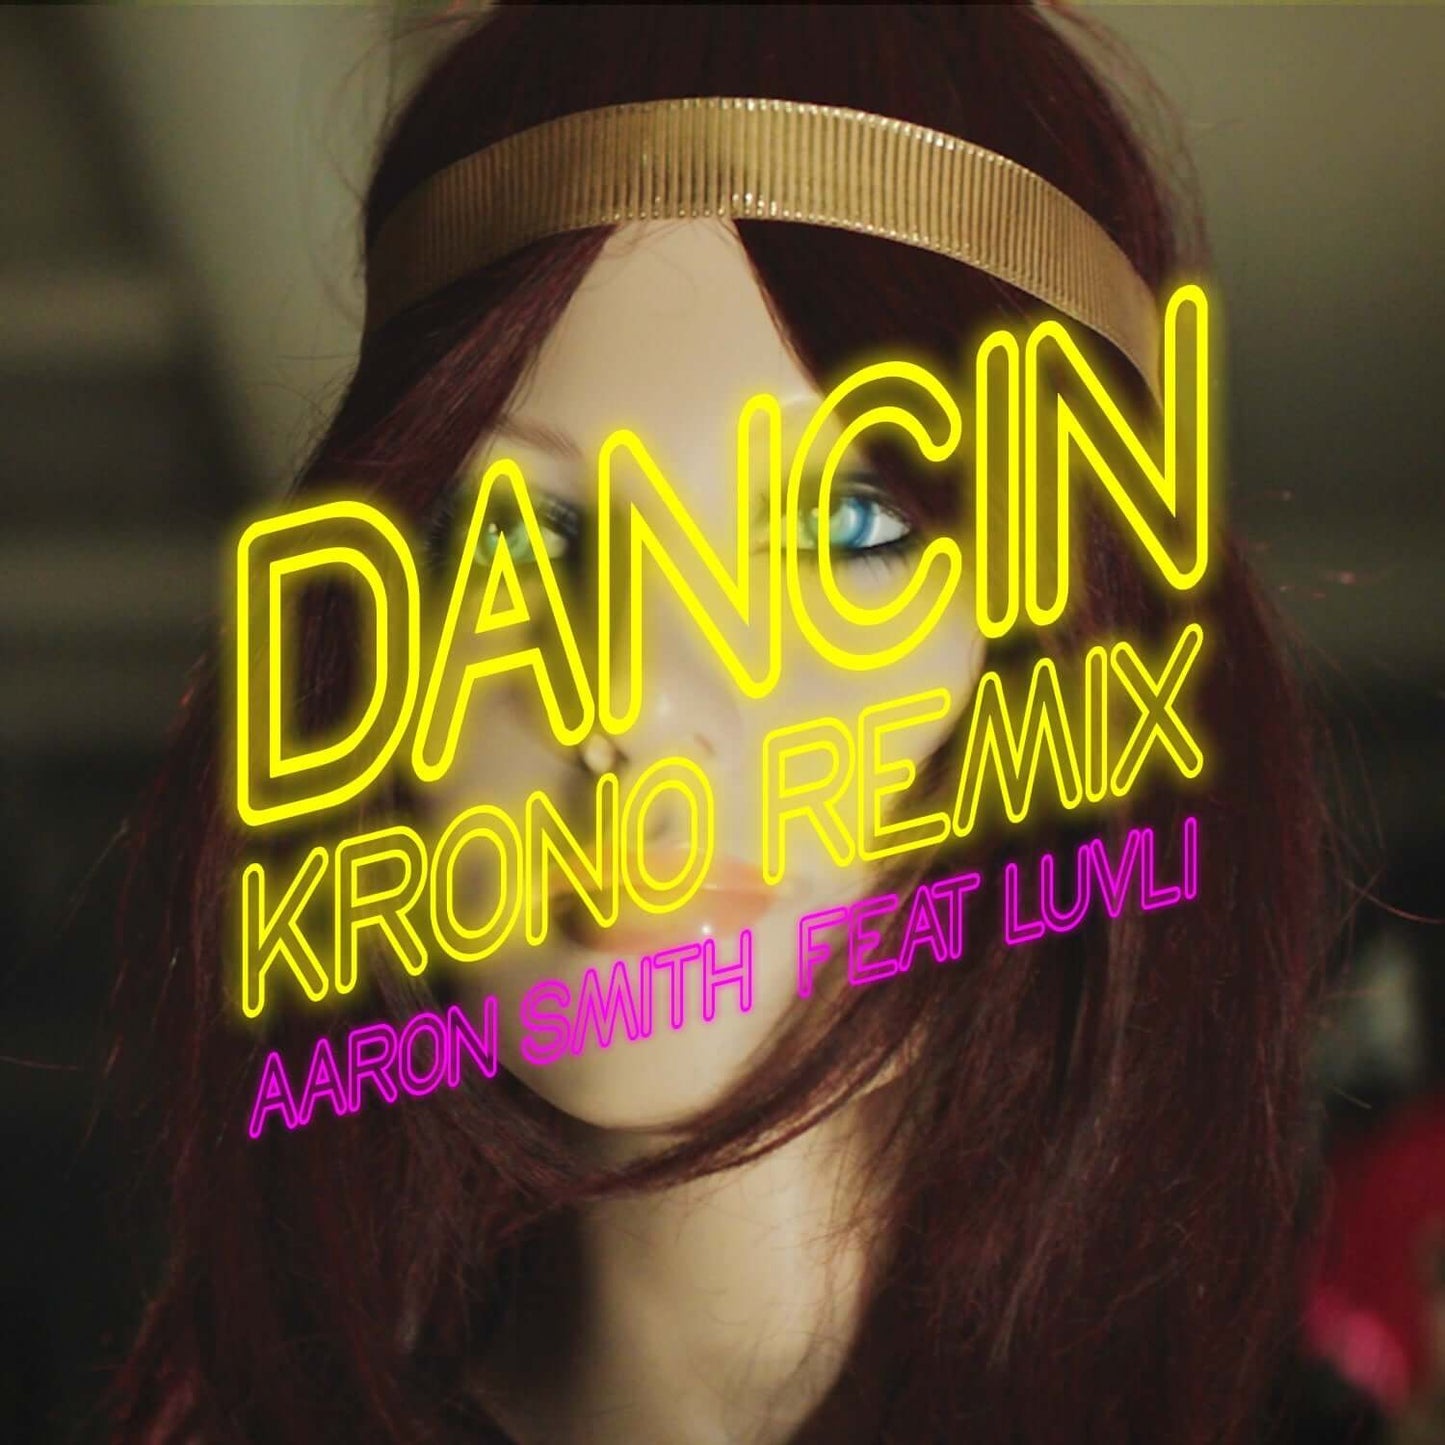 Aaron Smith - Dancin (Krono Remix) con Luvli (Studio Acapella)